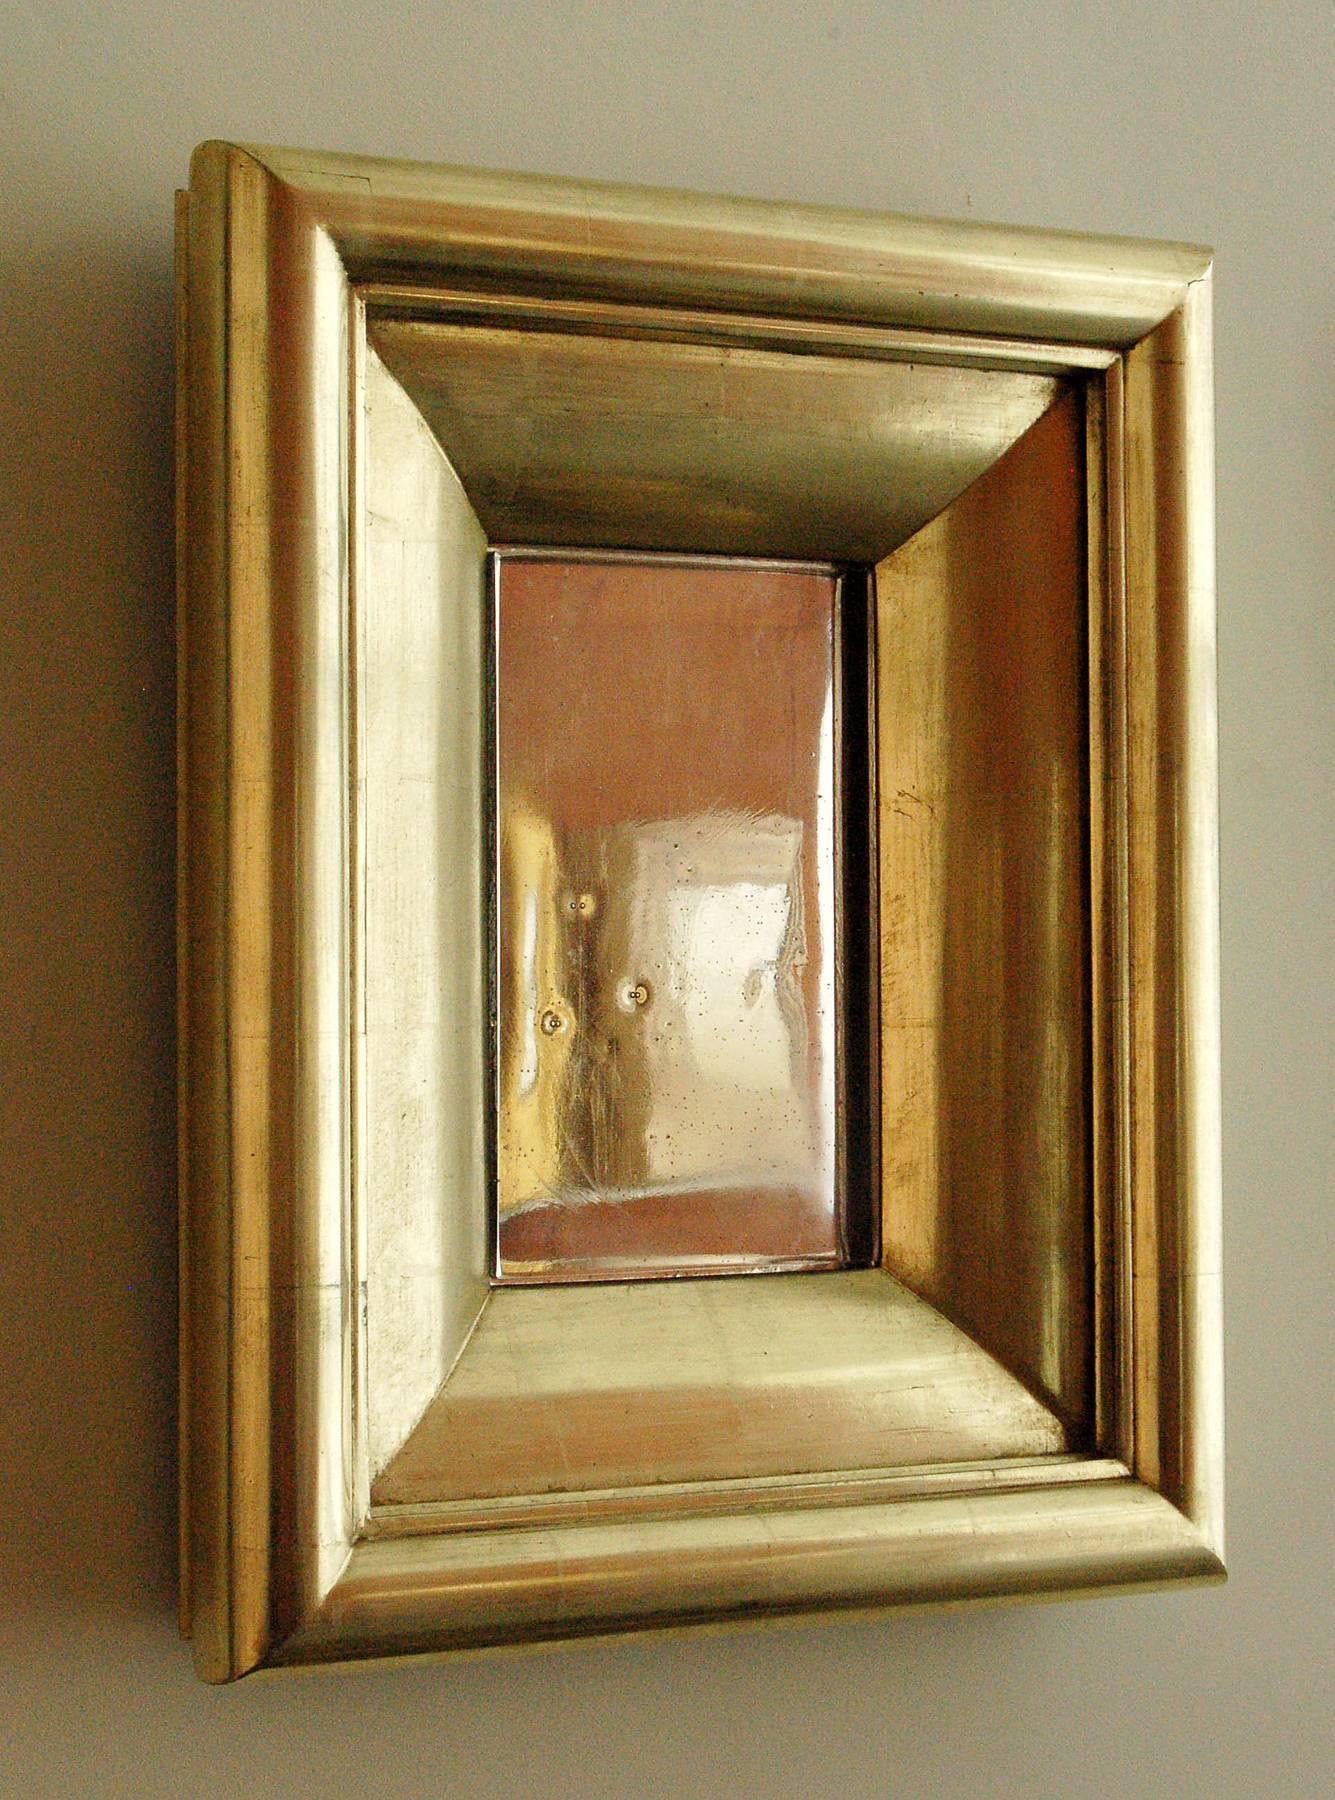 Burnished Degas No. 5 Modern Wall Mirror, Gilded in 23-Karat Yellow Gold, Bark Frameworks For Sale